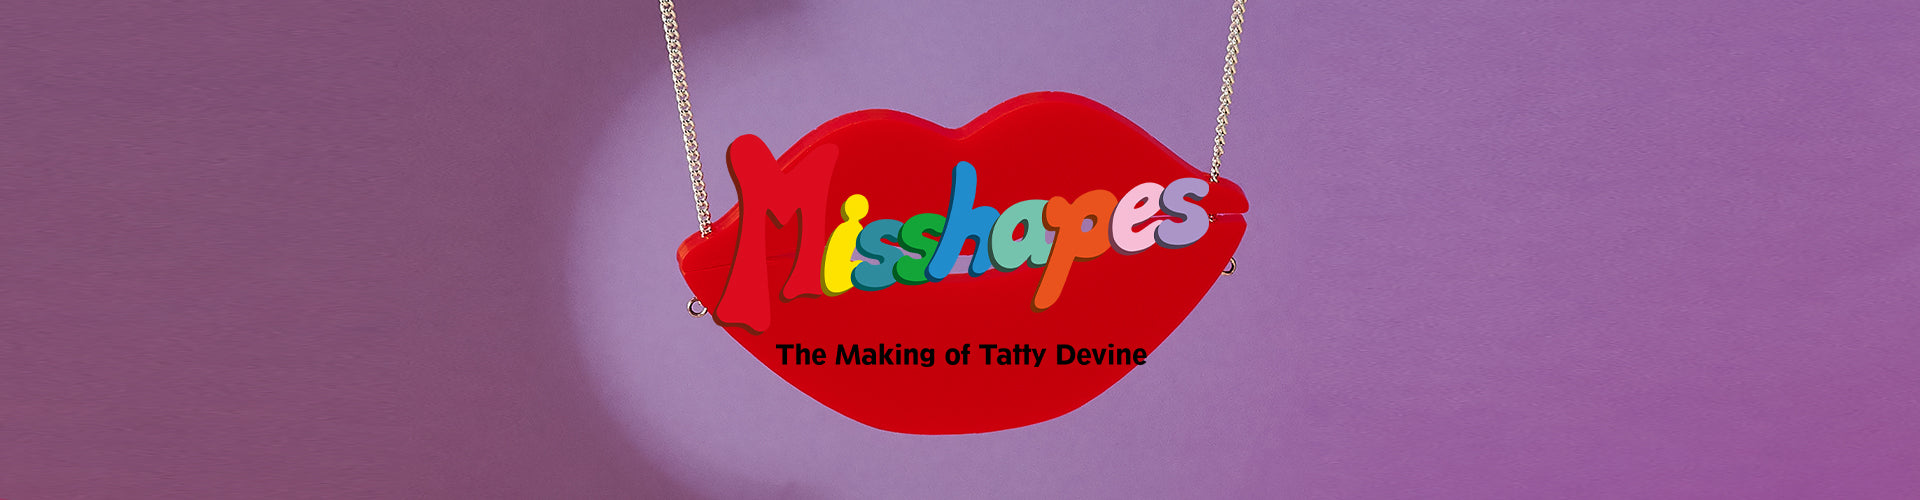 Misshapes: The Making of Tatty Devine